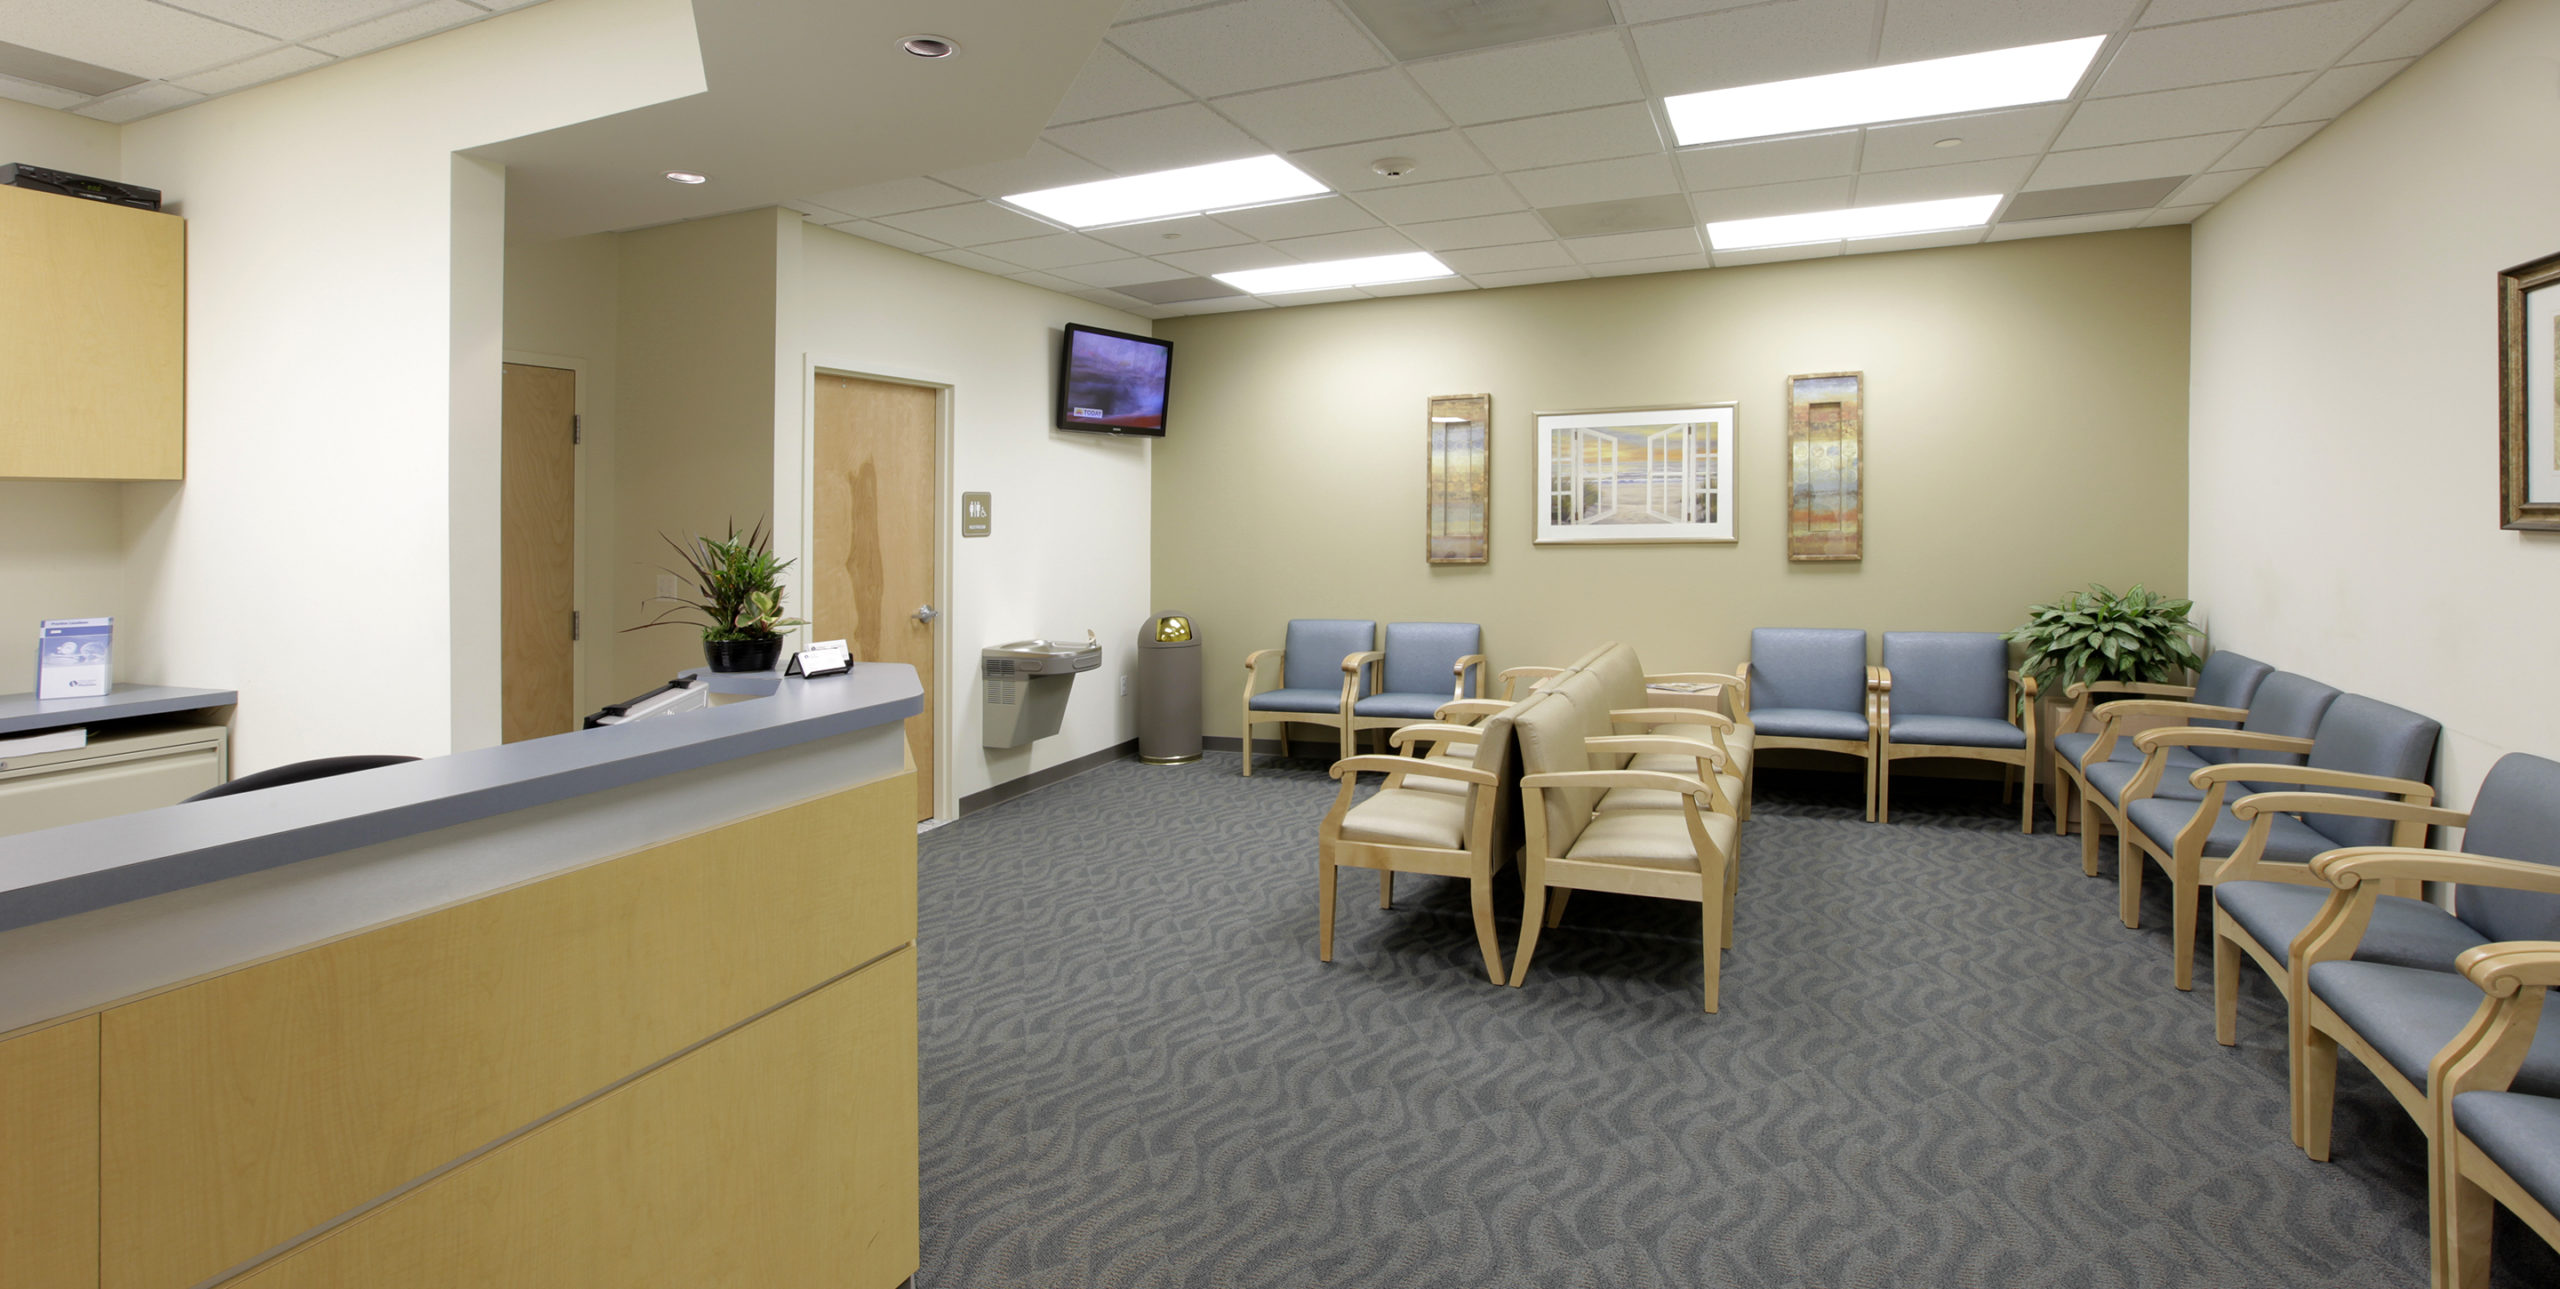 Lobby of Stony Brook University Associates in Obstetrics and Gynecology at 4 Technology Drive, East Setauket